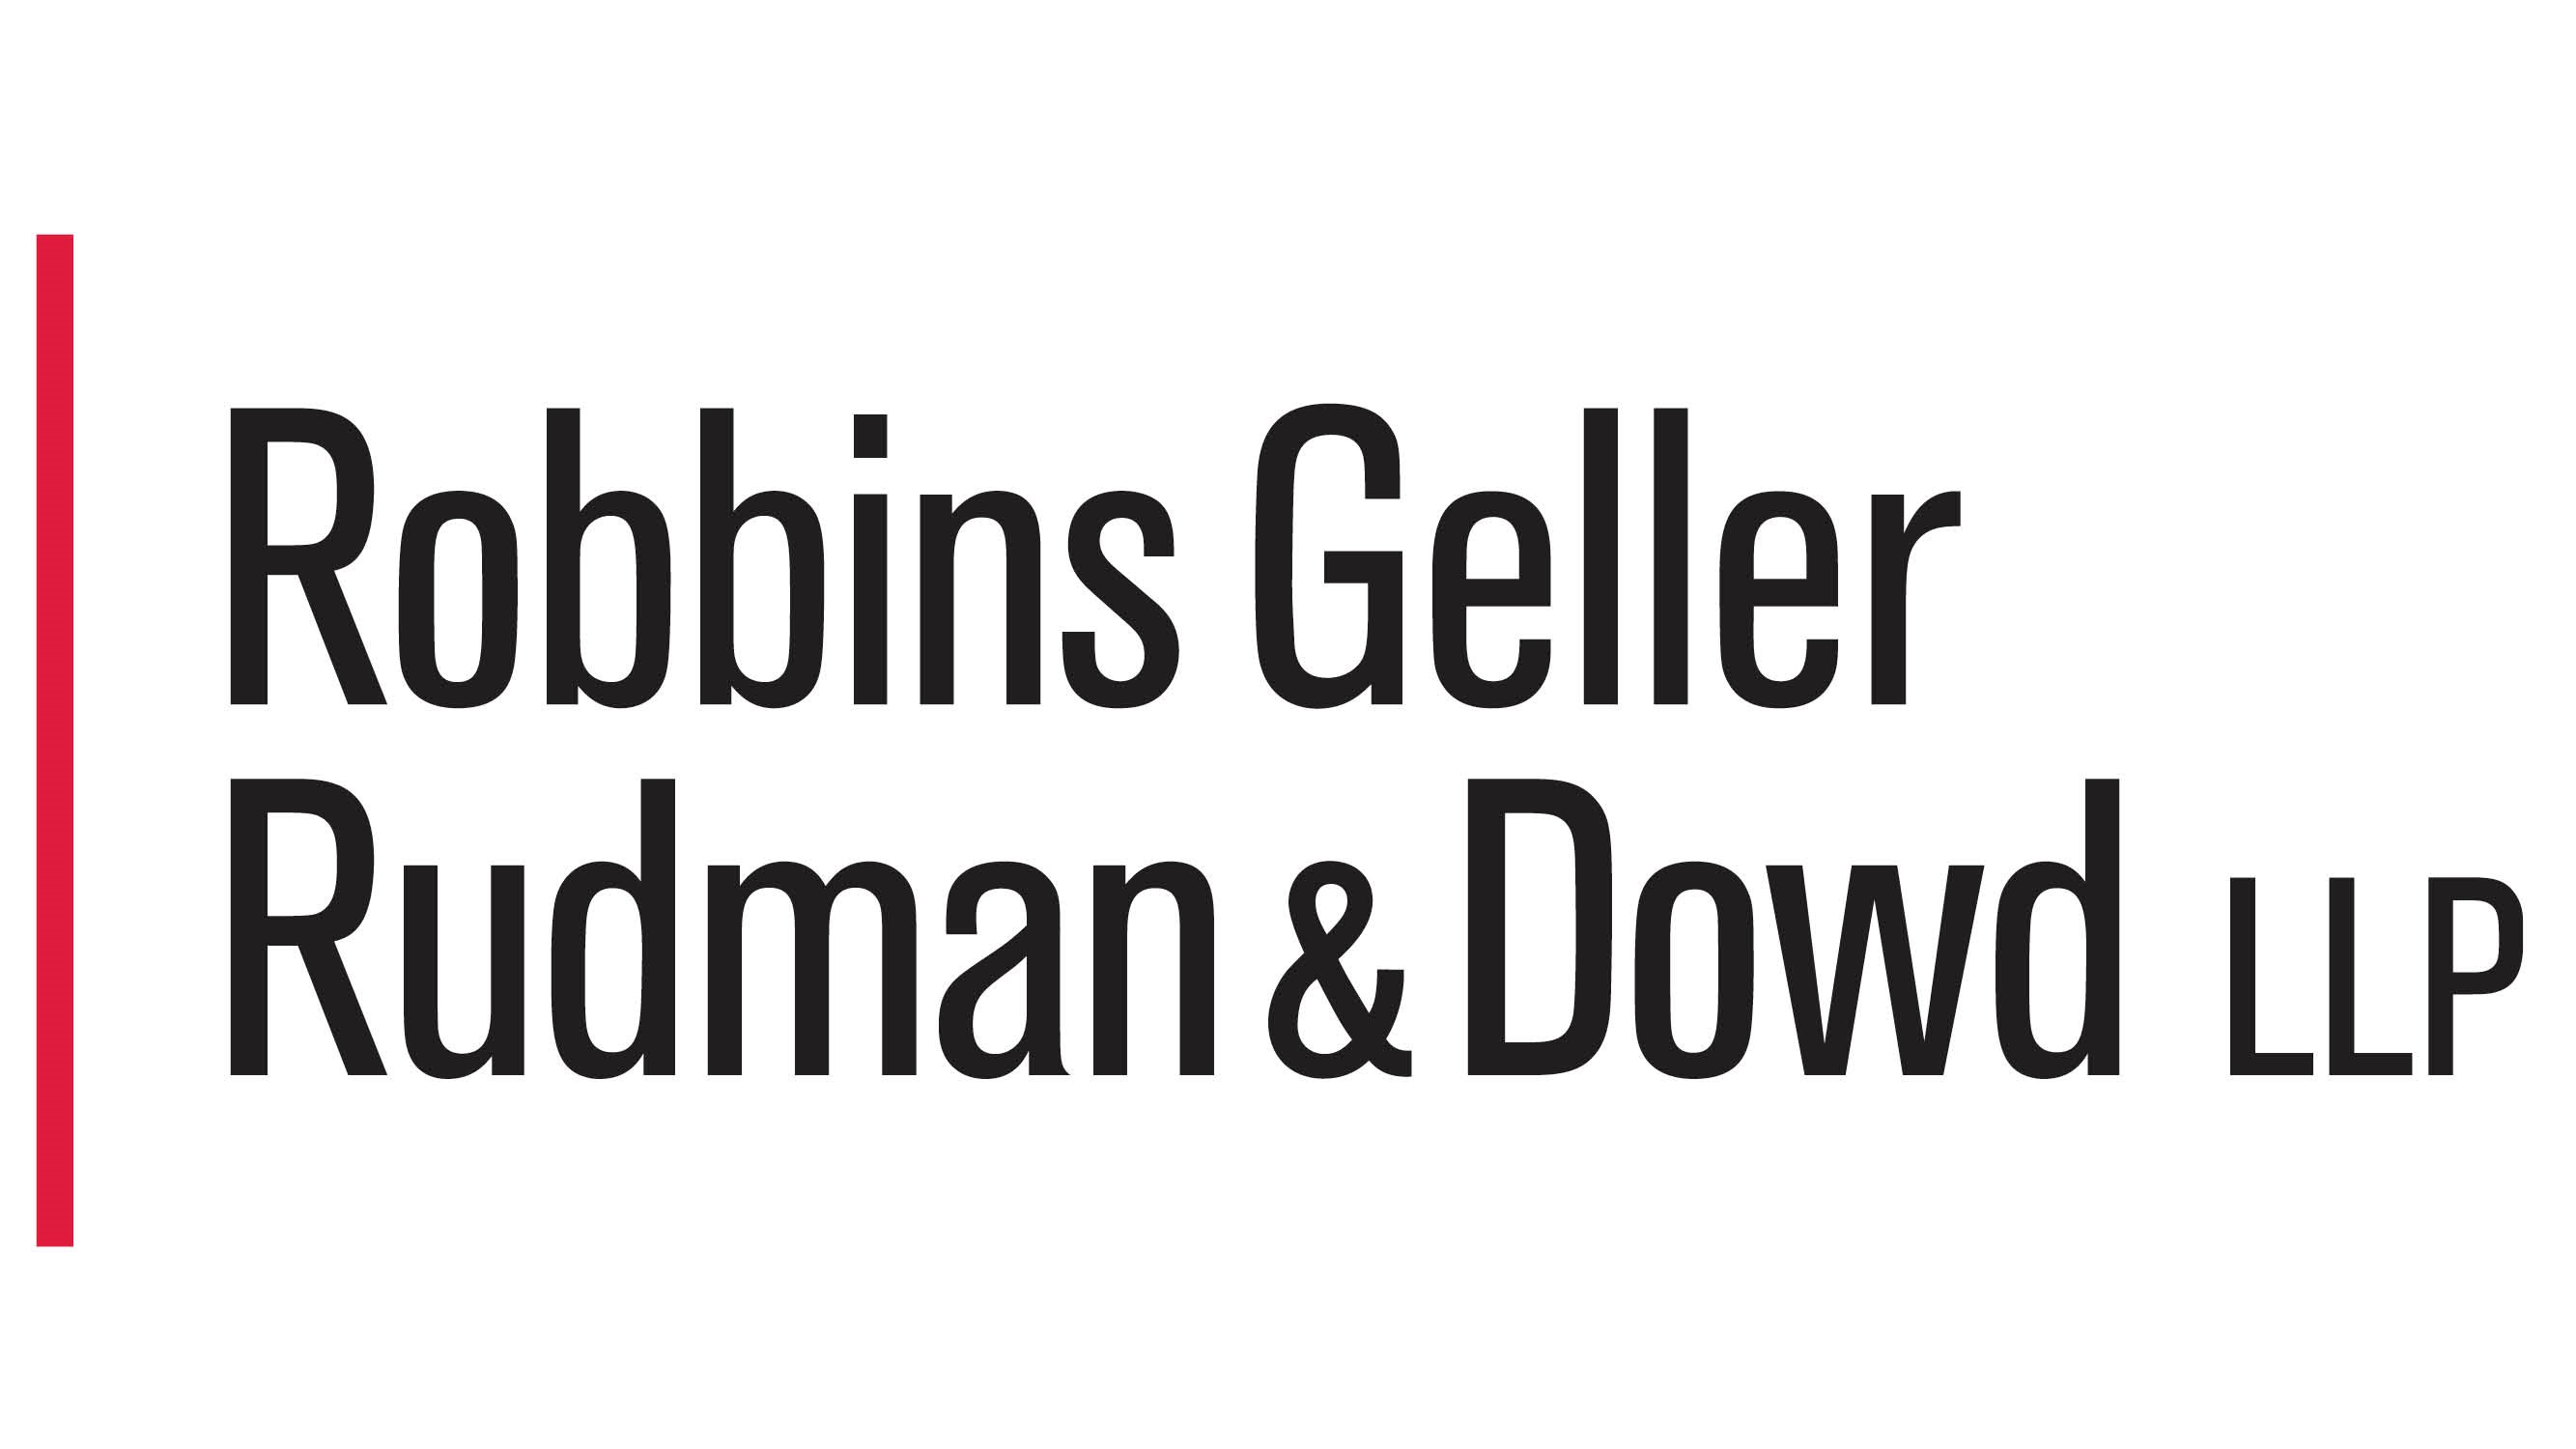 Robbins Geller Rudman & Dowd LLP, Tuesday, October 12, 2021, Press release picture